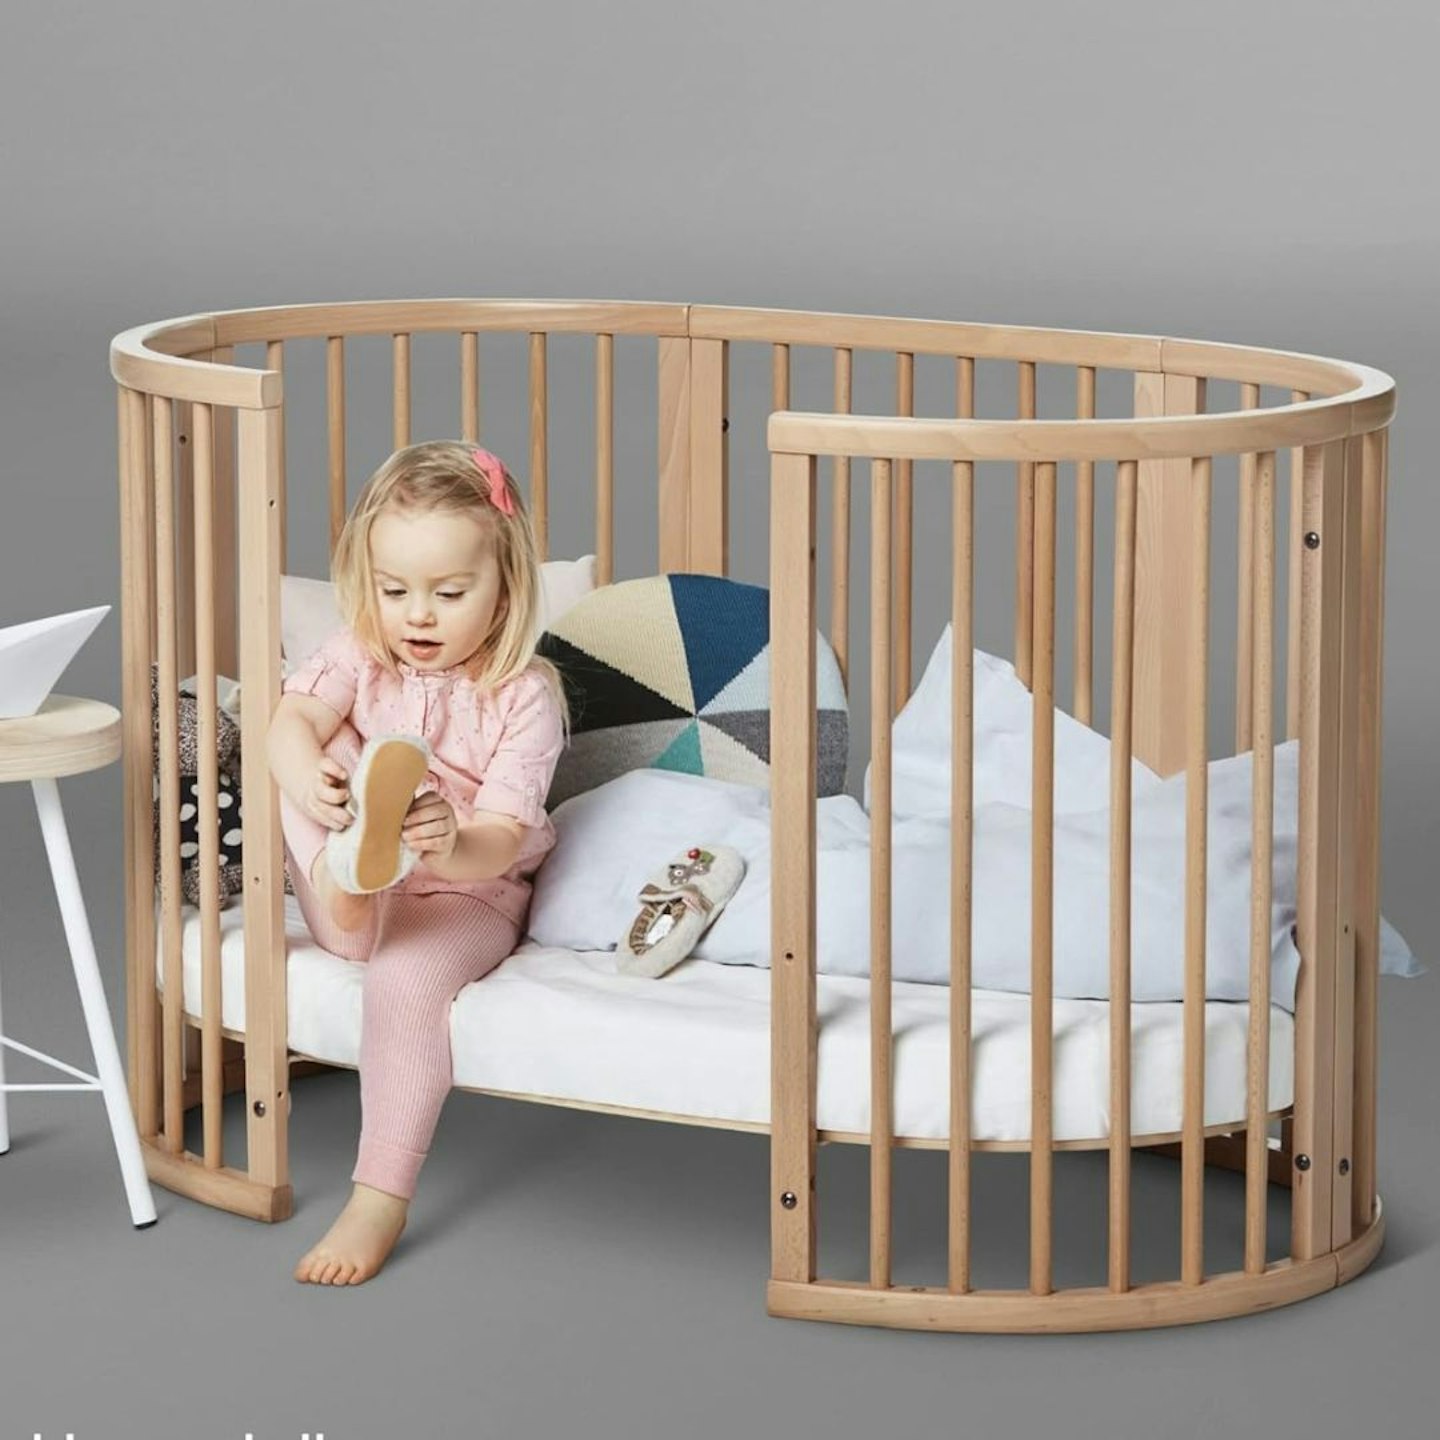 Stokke Sleepi Crib